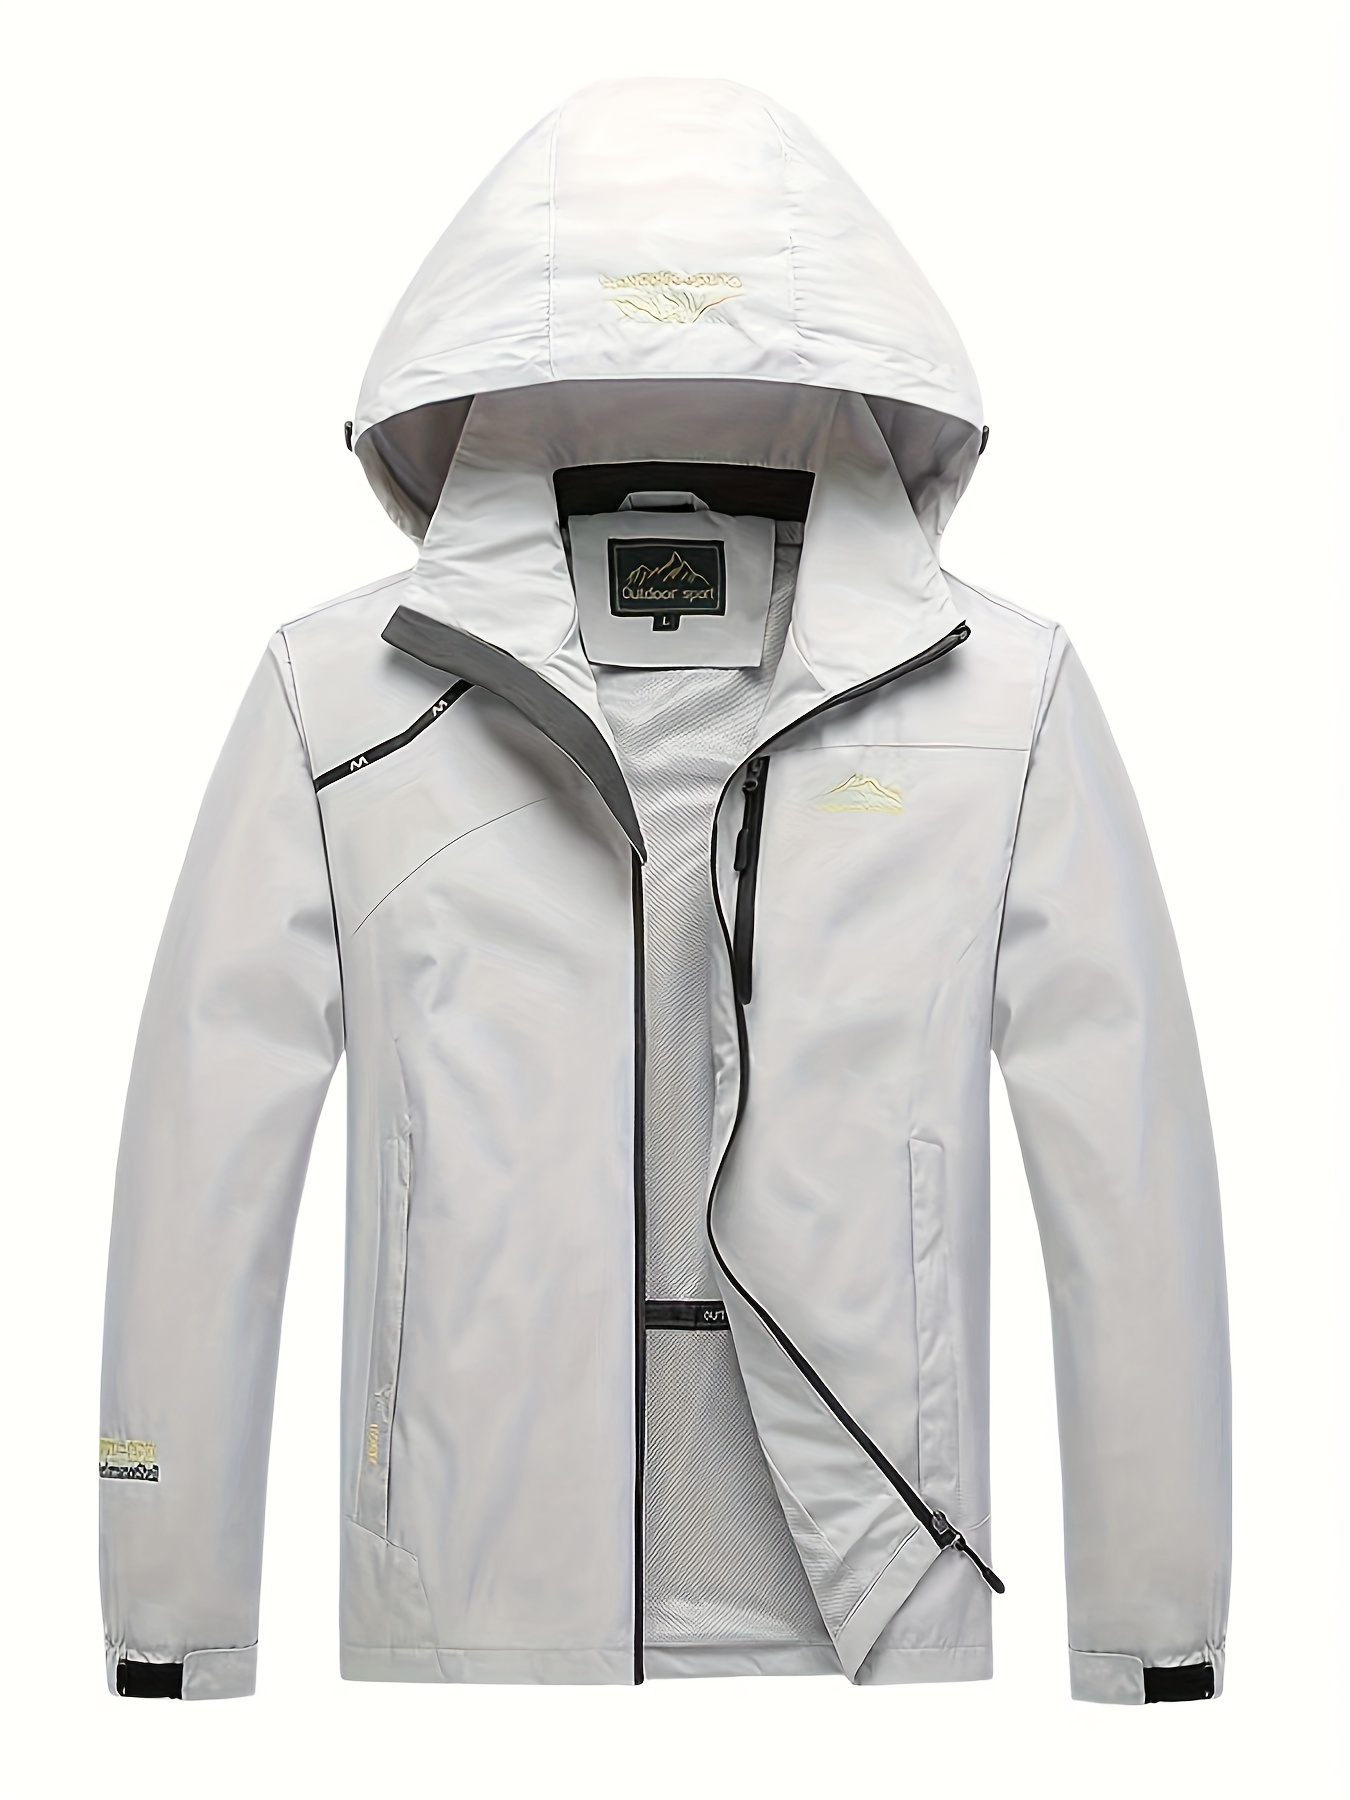 mens waterproof rain jacket lightweight raincoat windbreaker with hood for hiking travel outdoor details 0